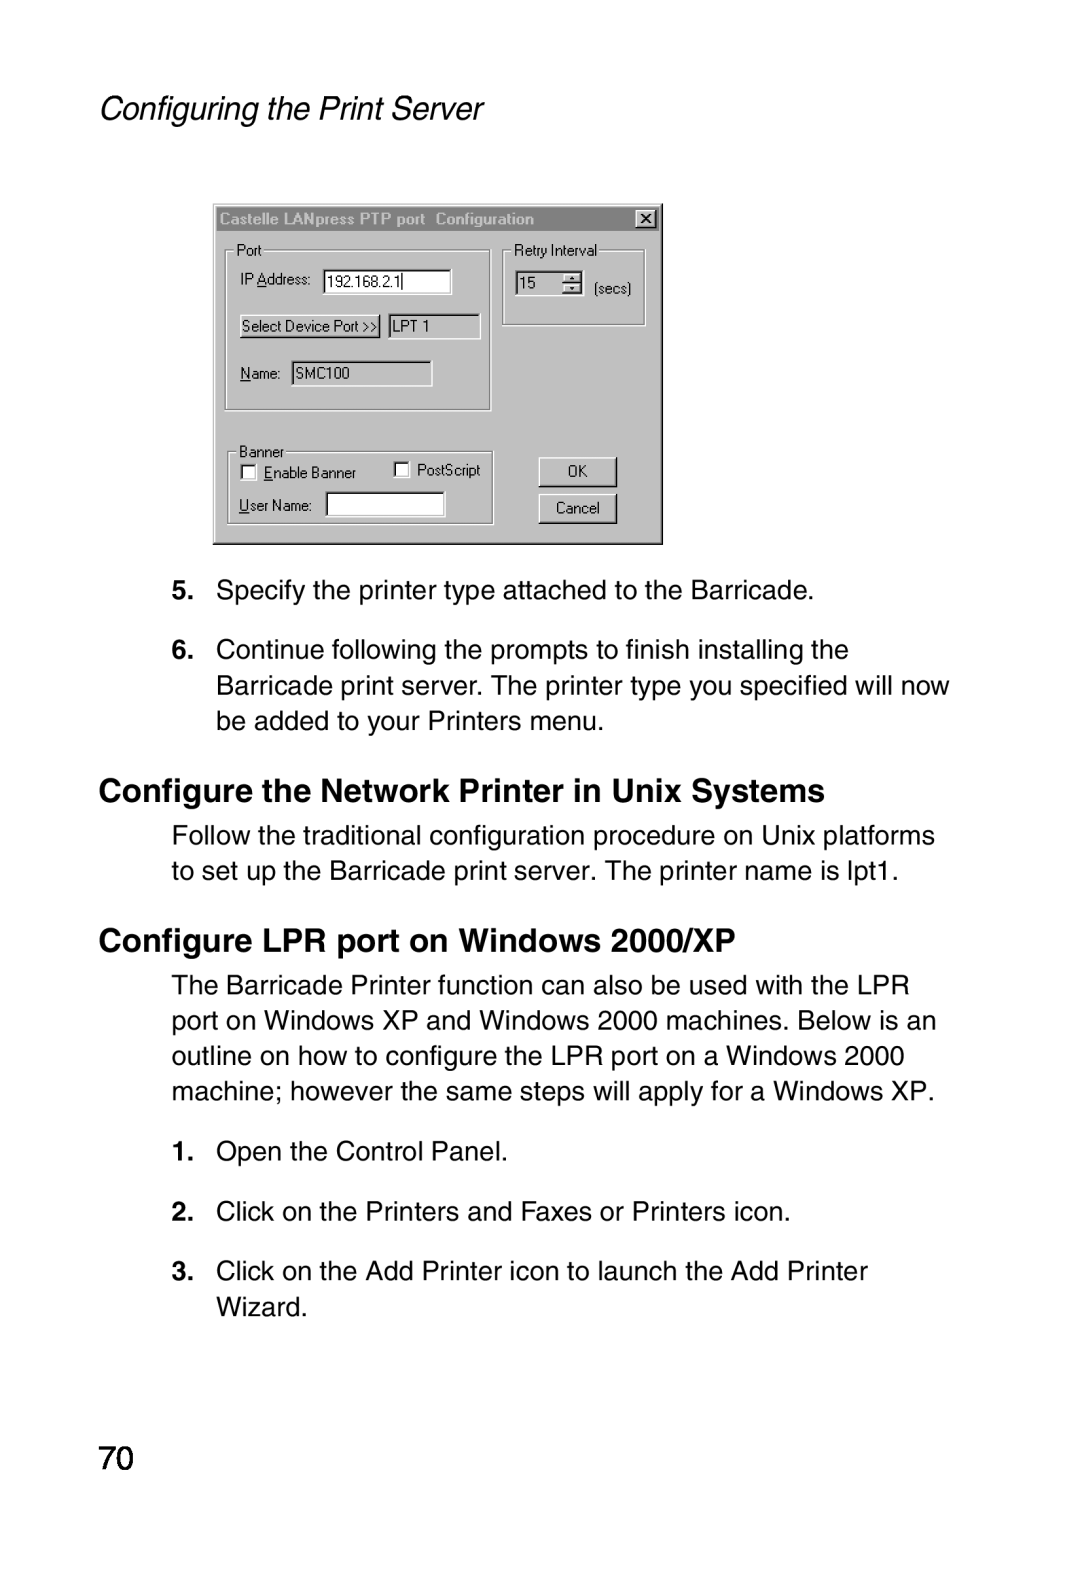 Sharp SMC7004ABR, S M C 7 0 0 4 A B R Configure the Network Printer in Unix Systems, Configure LPR port on Windows 2000/XP 